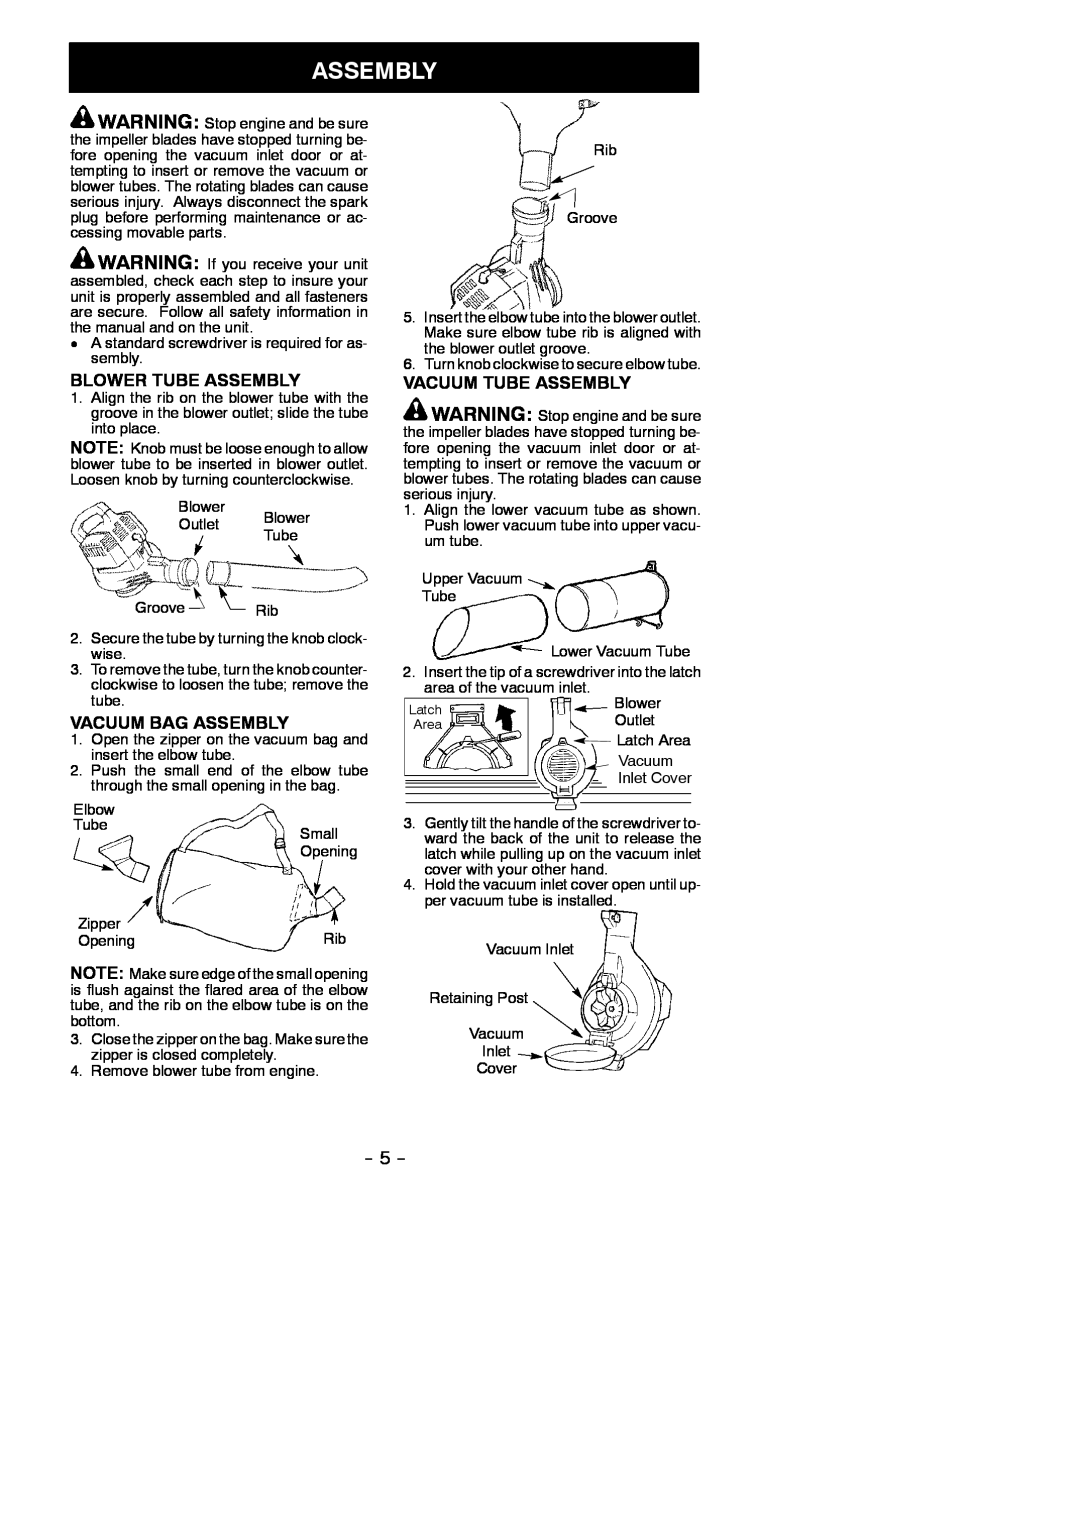 Poulan SM400 instruction manual Blower Tube Assembly, Vacuum Bag Assembly, Vacuum Tube Assembly 